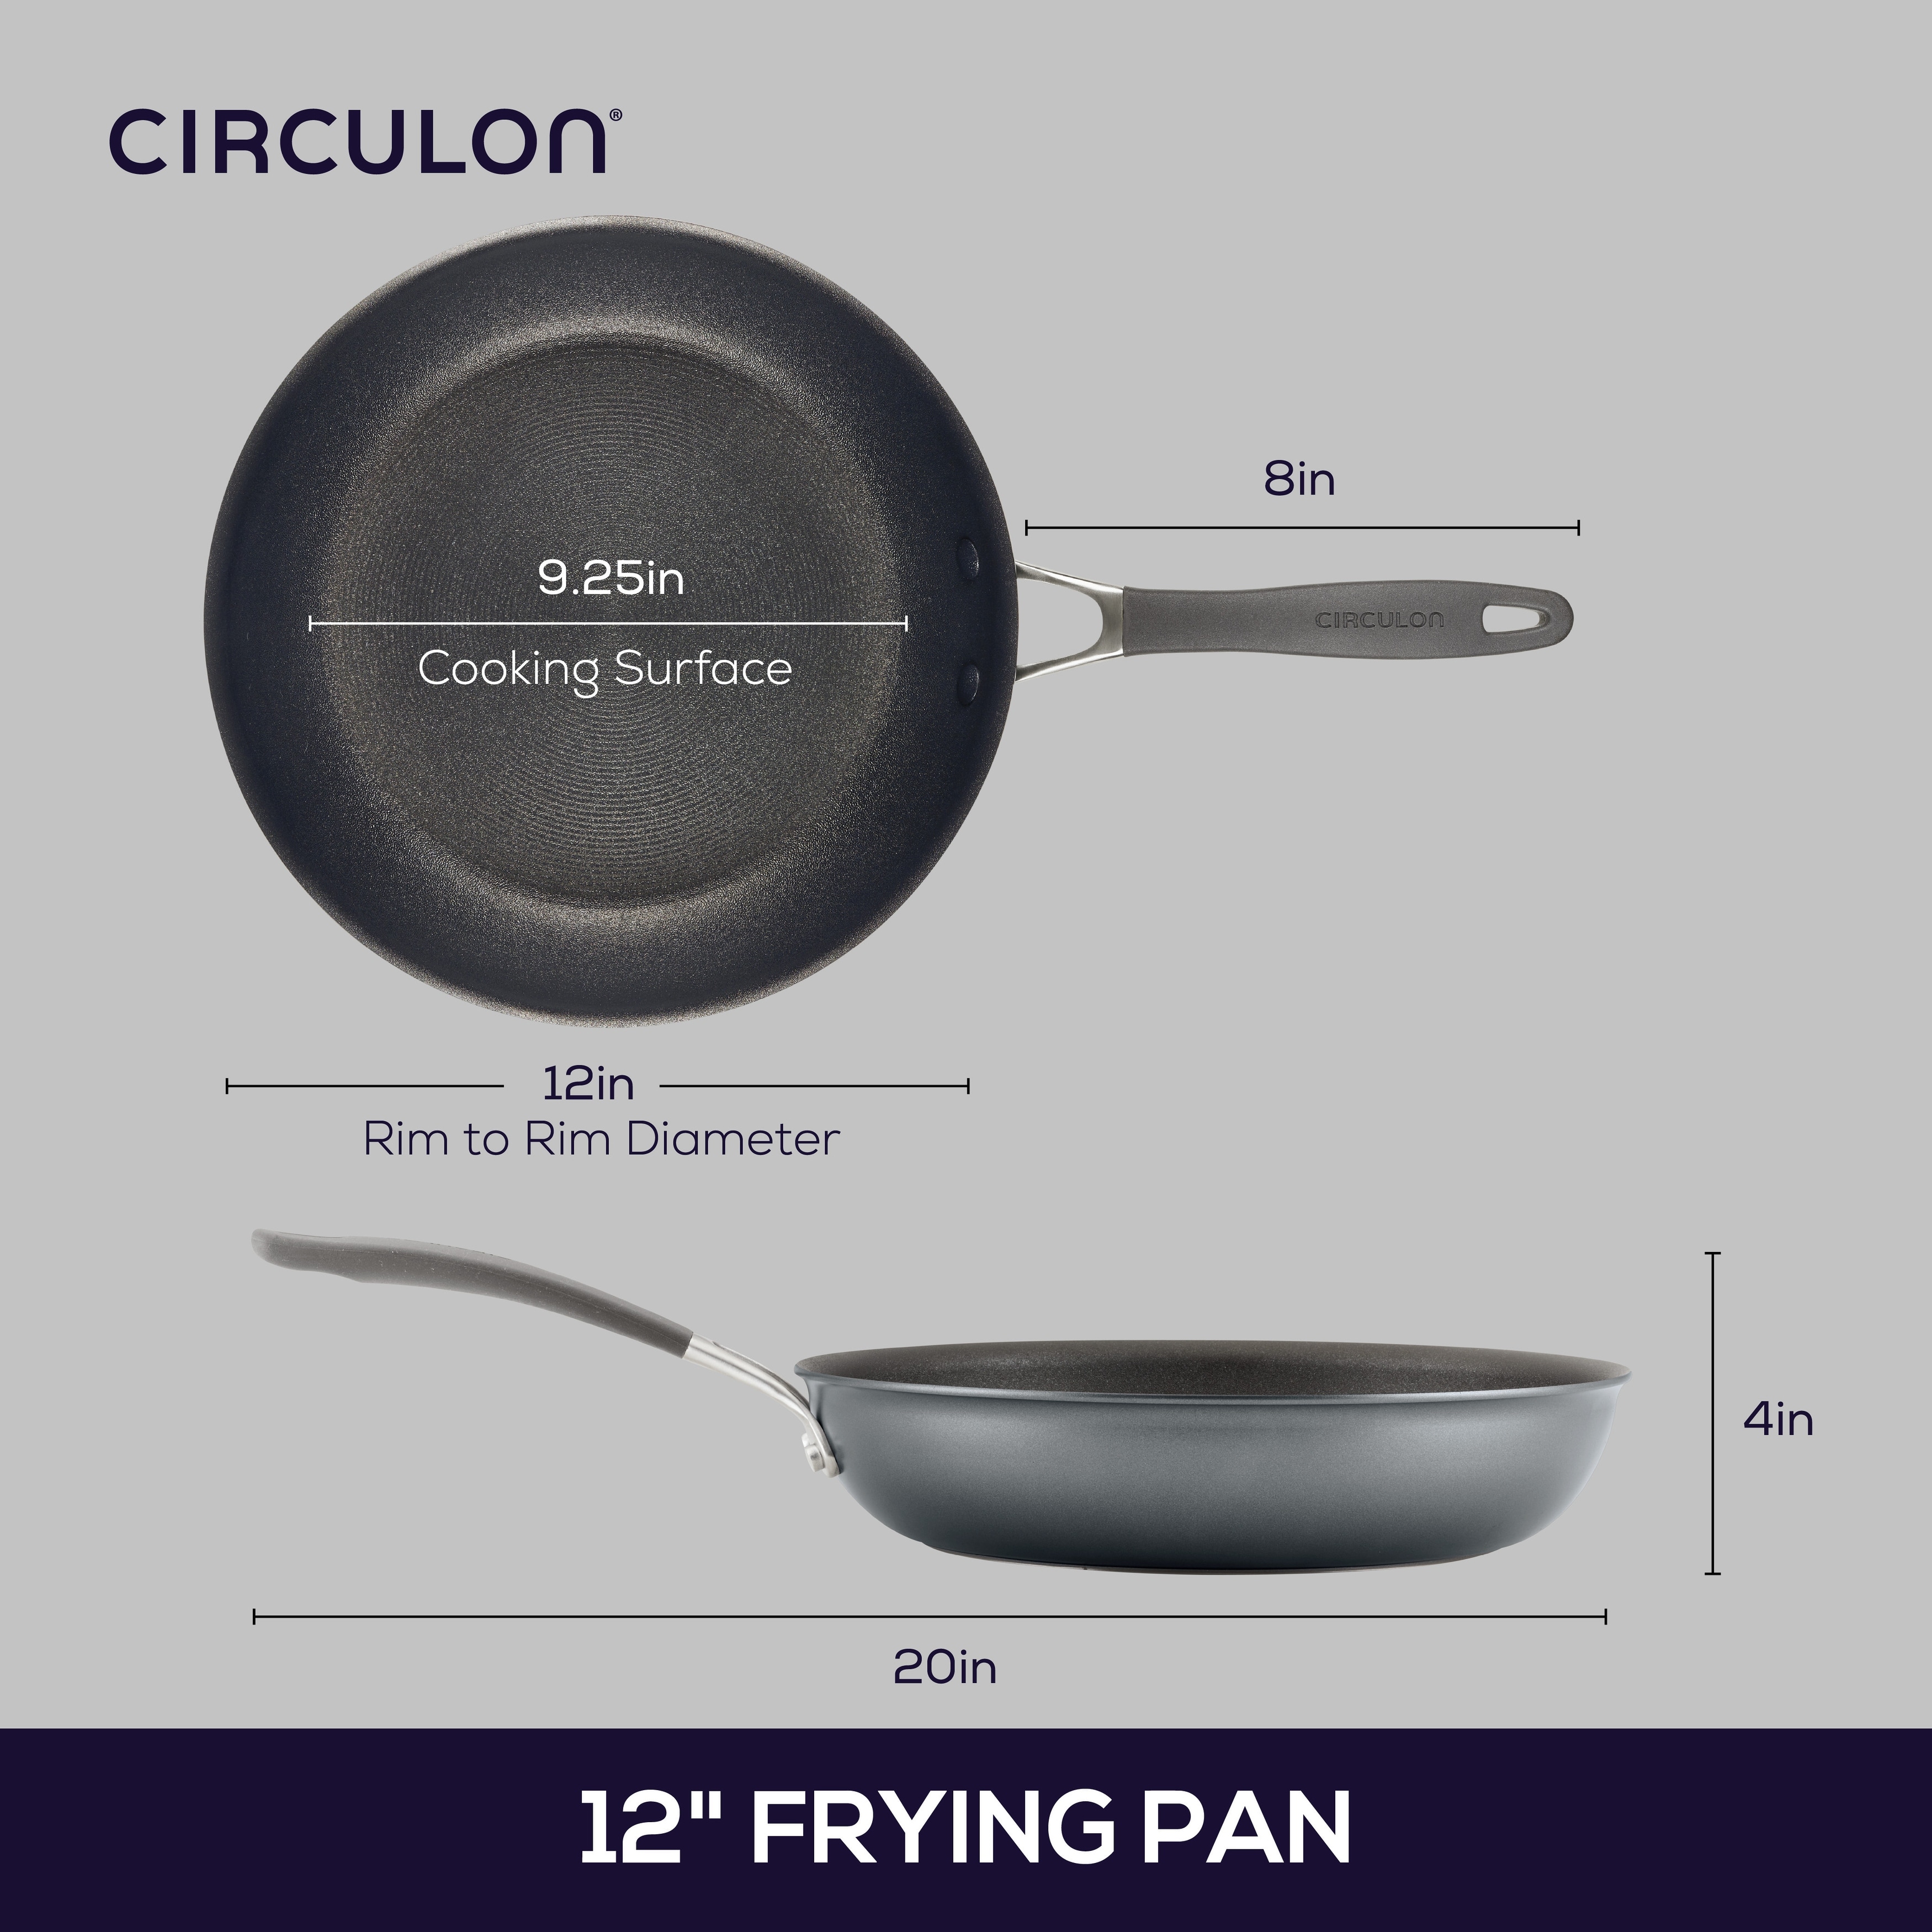 Circulon A1 Series 10pc. Nonstick Induction Cookware Set - Boscov's